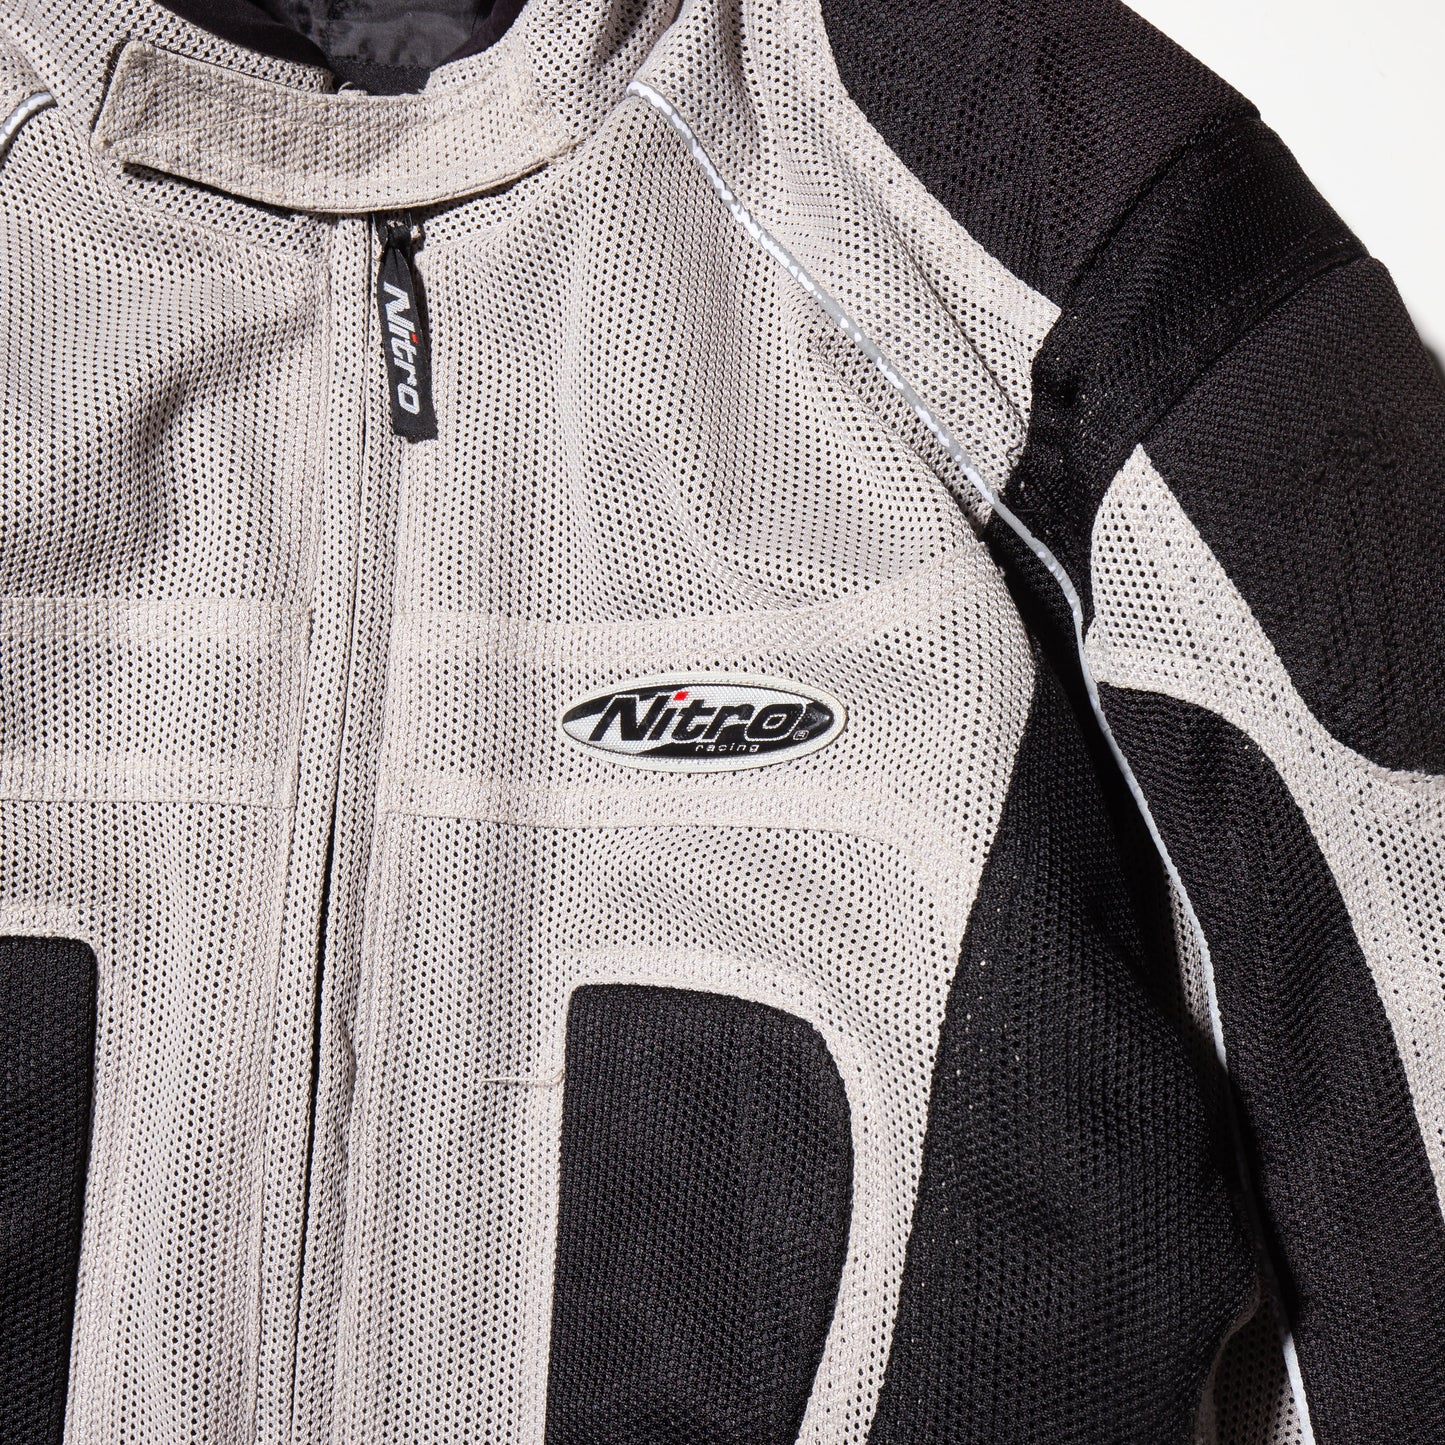 vintage nitro mesh motocross jacket